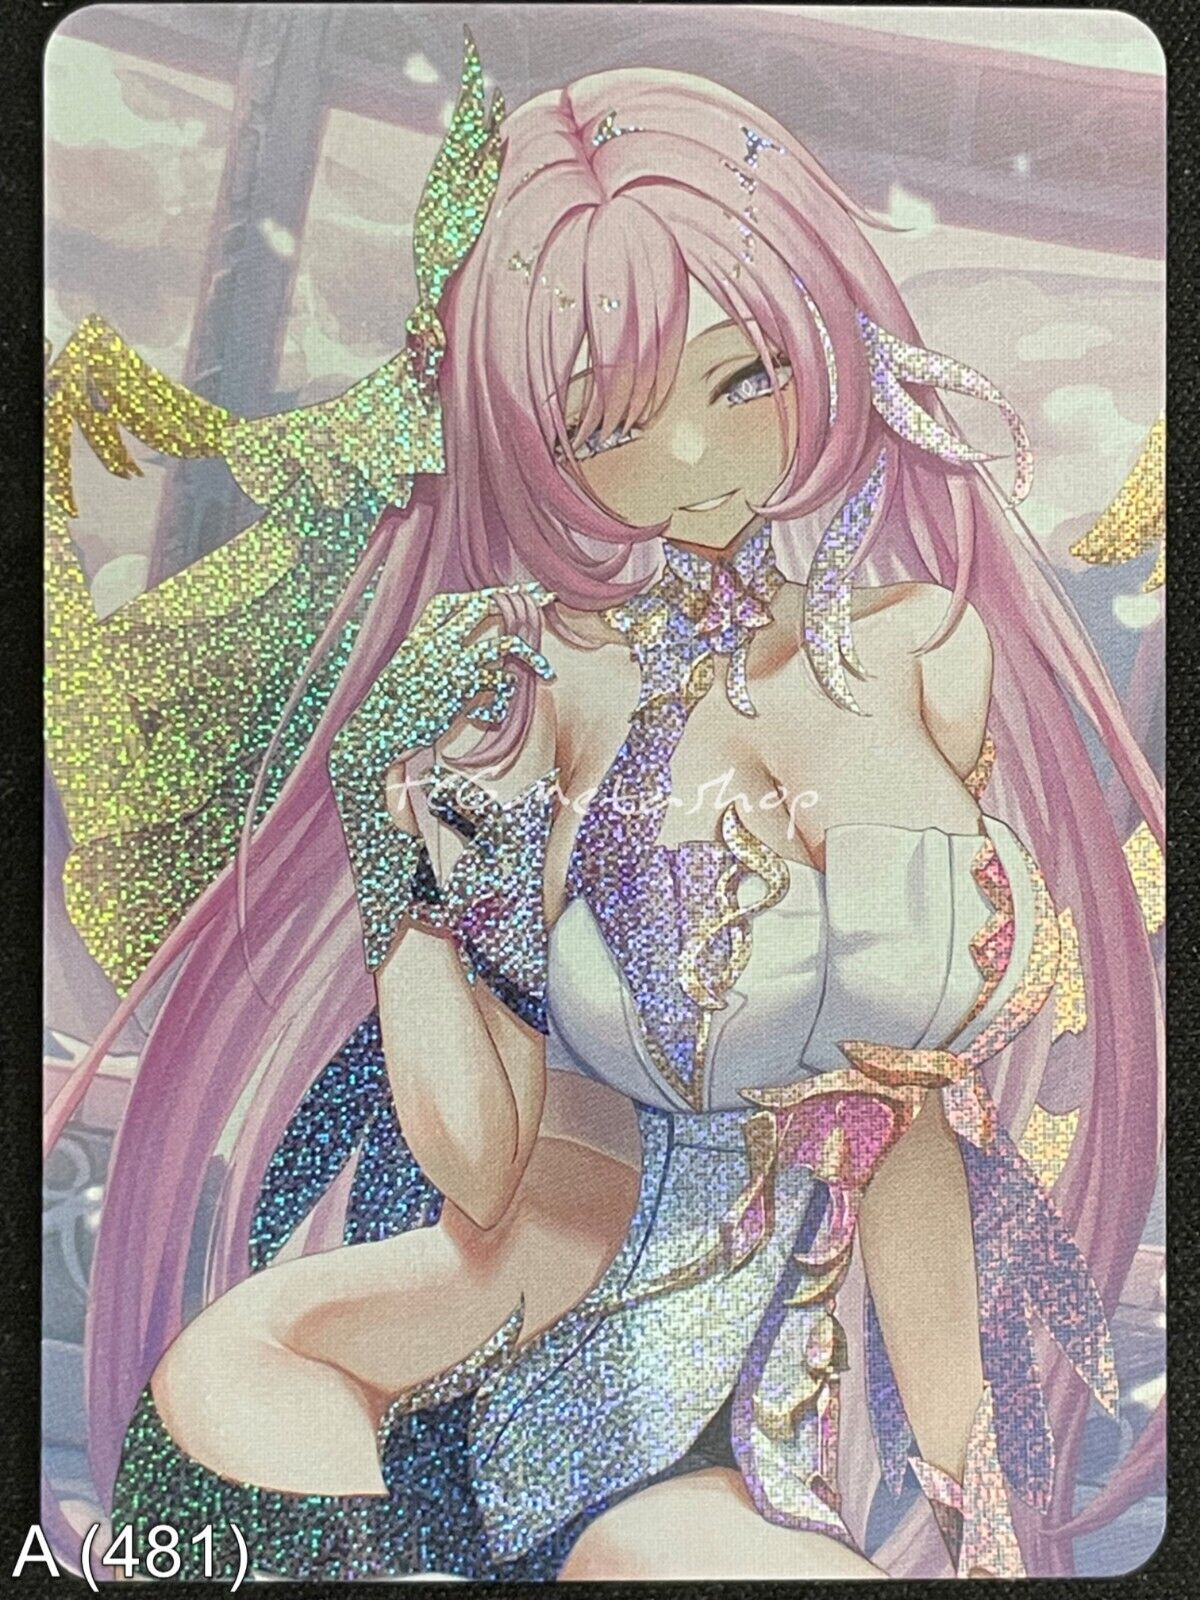 🔥 A 481 Sexy Girl Goddess Story Anime Waifu Card ACG 🔥